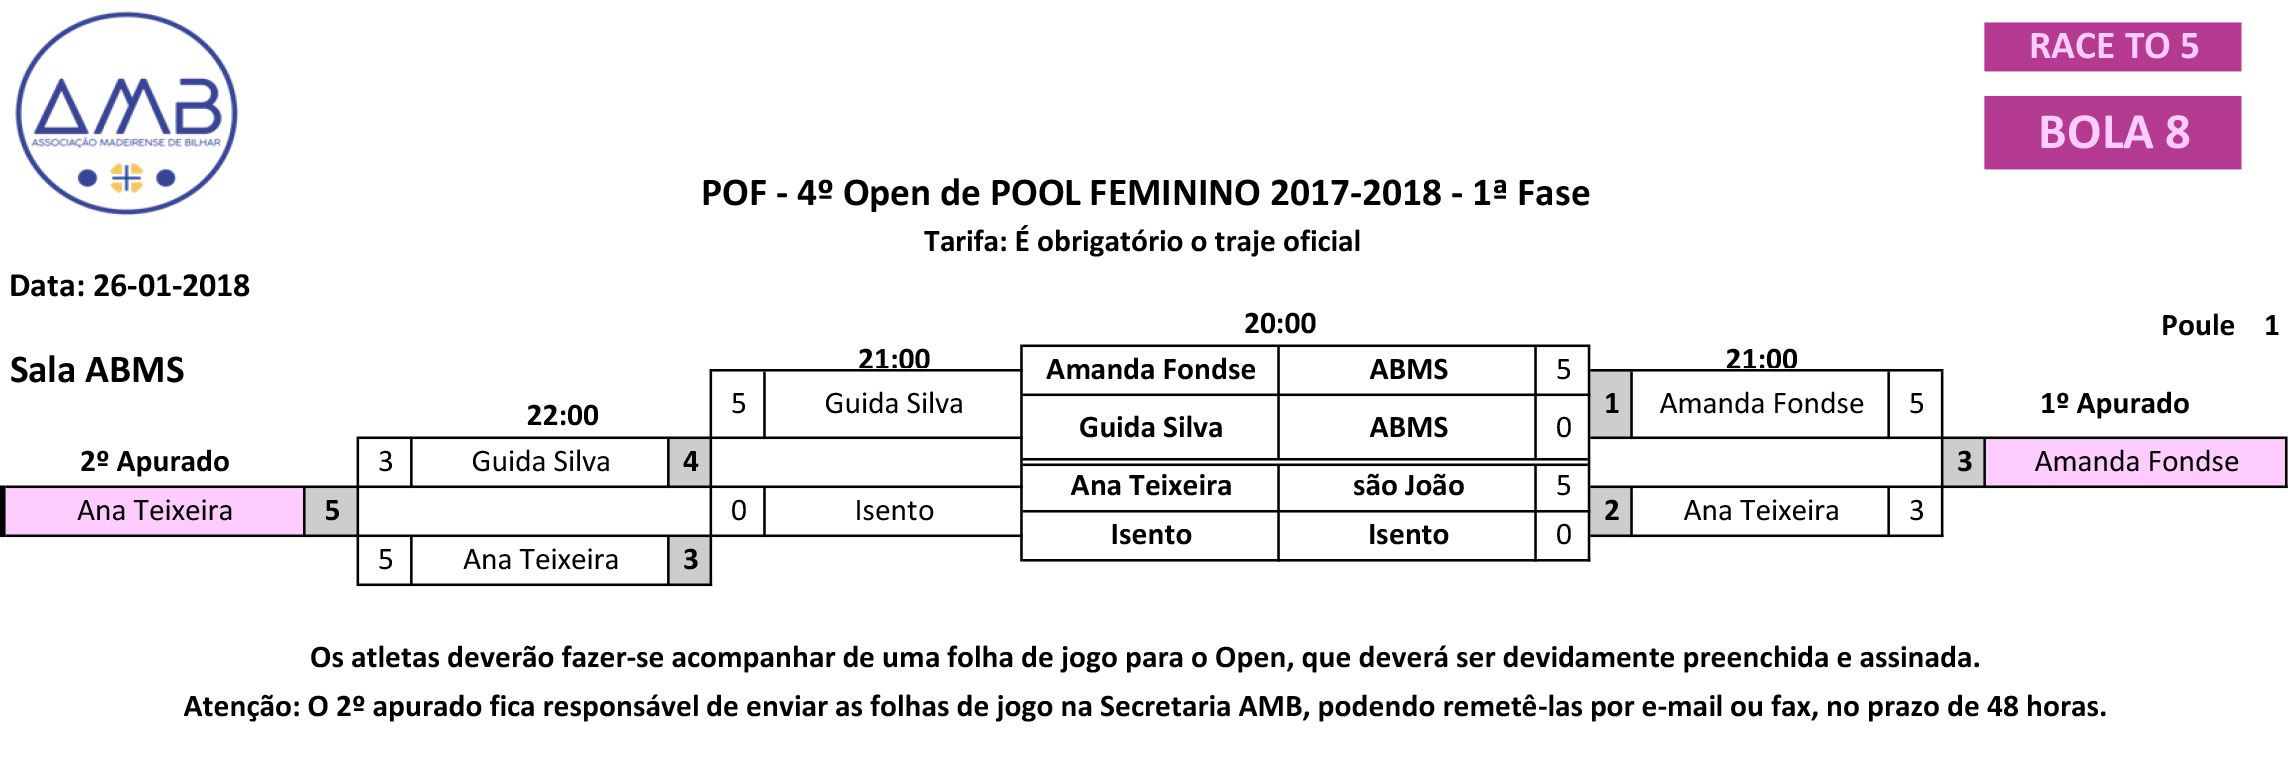 4º OPEN INDIVIDUAL DE POOL FEMININO 2017 - 2018 1 fase